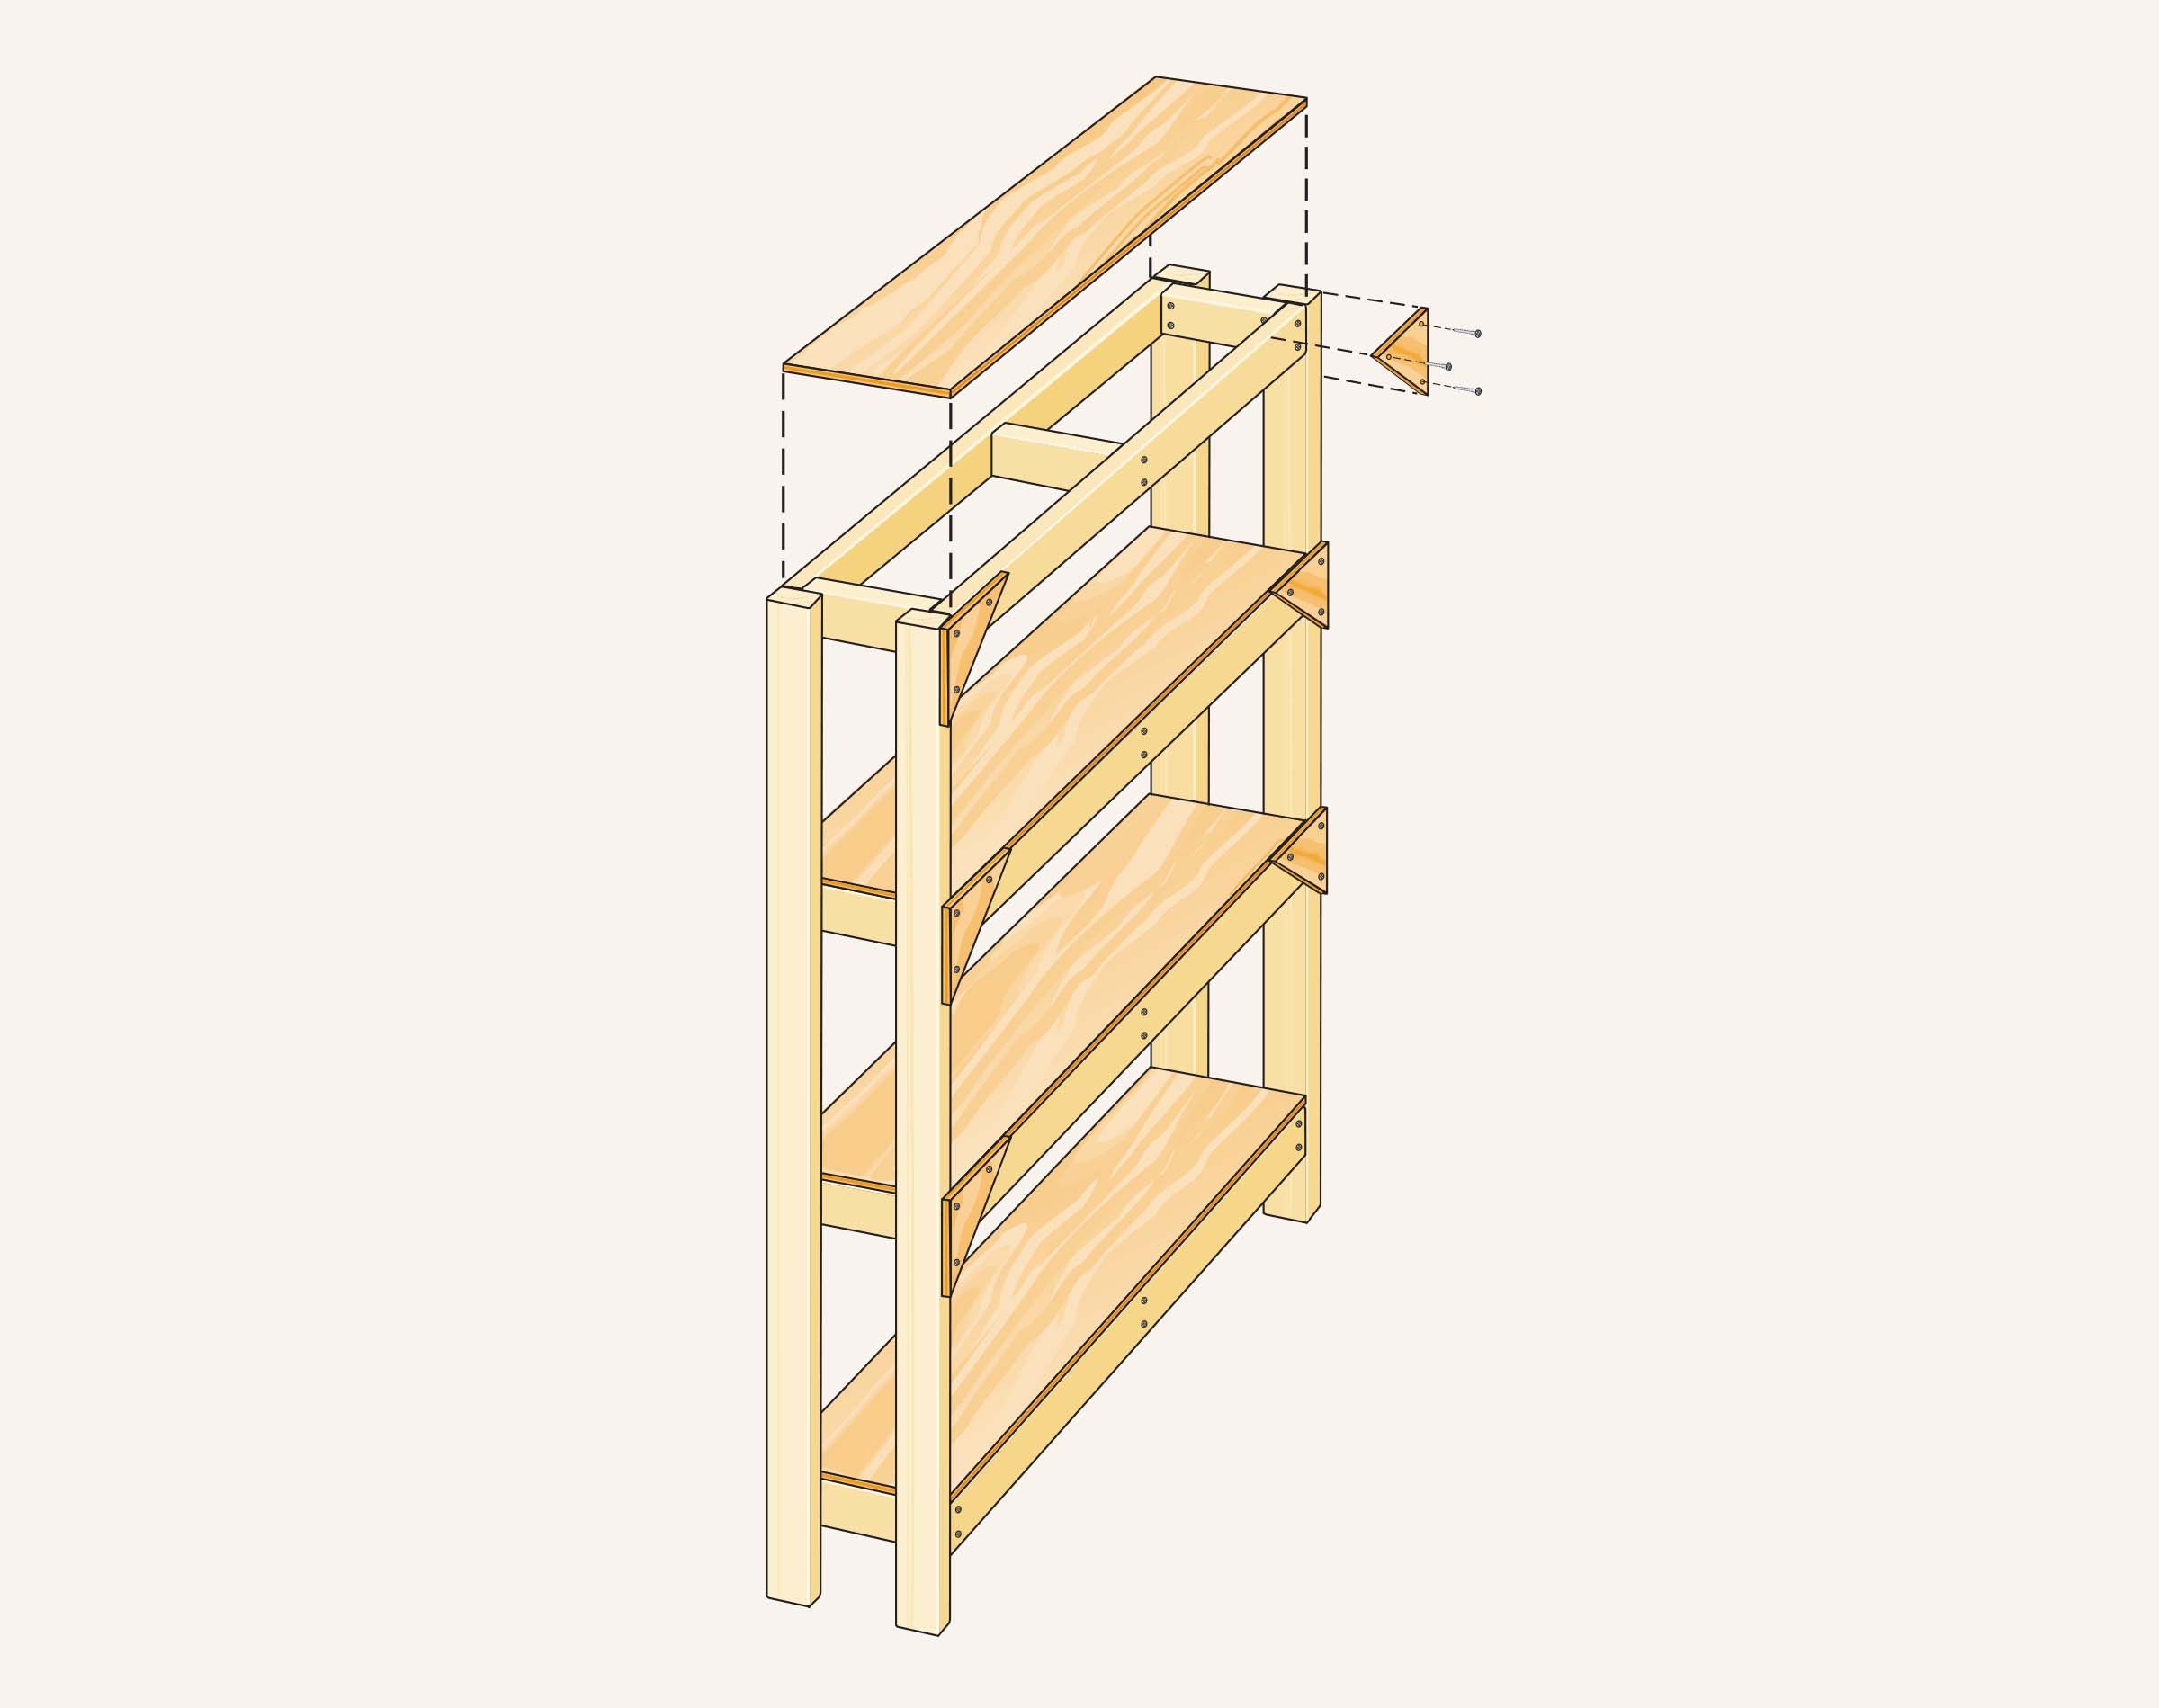 How to Build Easy DIY Storage Shelves 